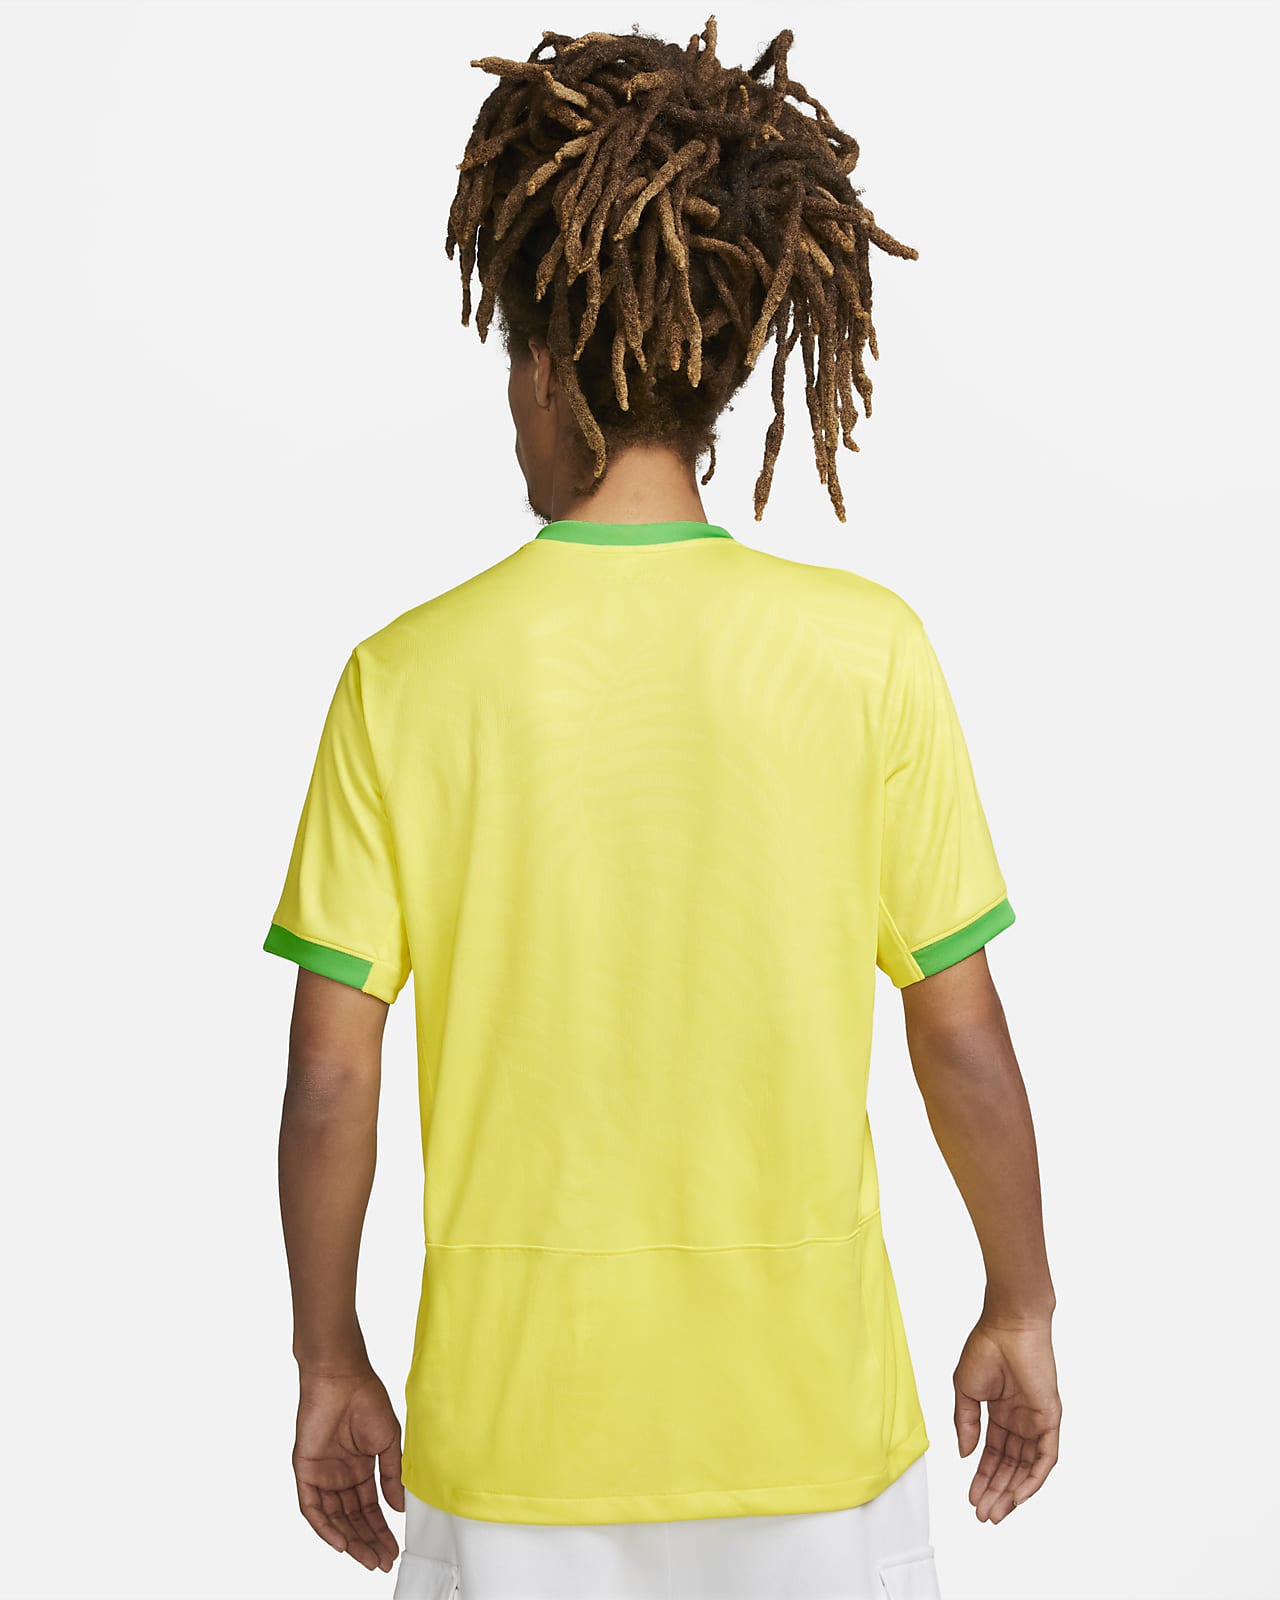 Brazil Tee - Trendy and Comfortable Football Fan Shirt